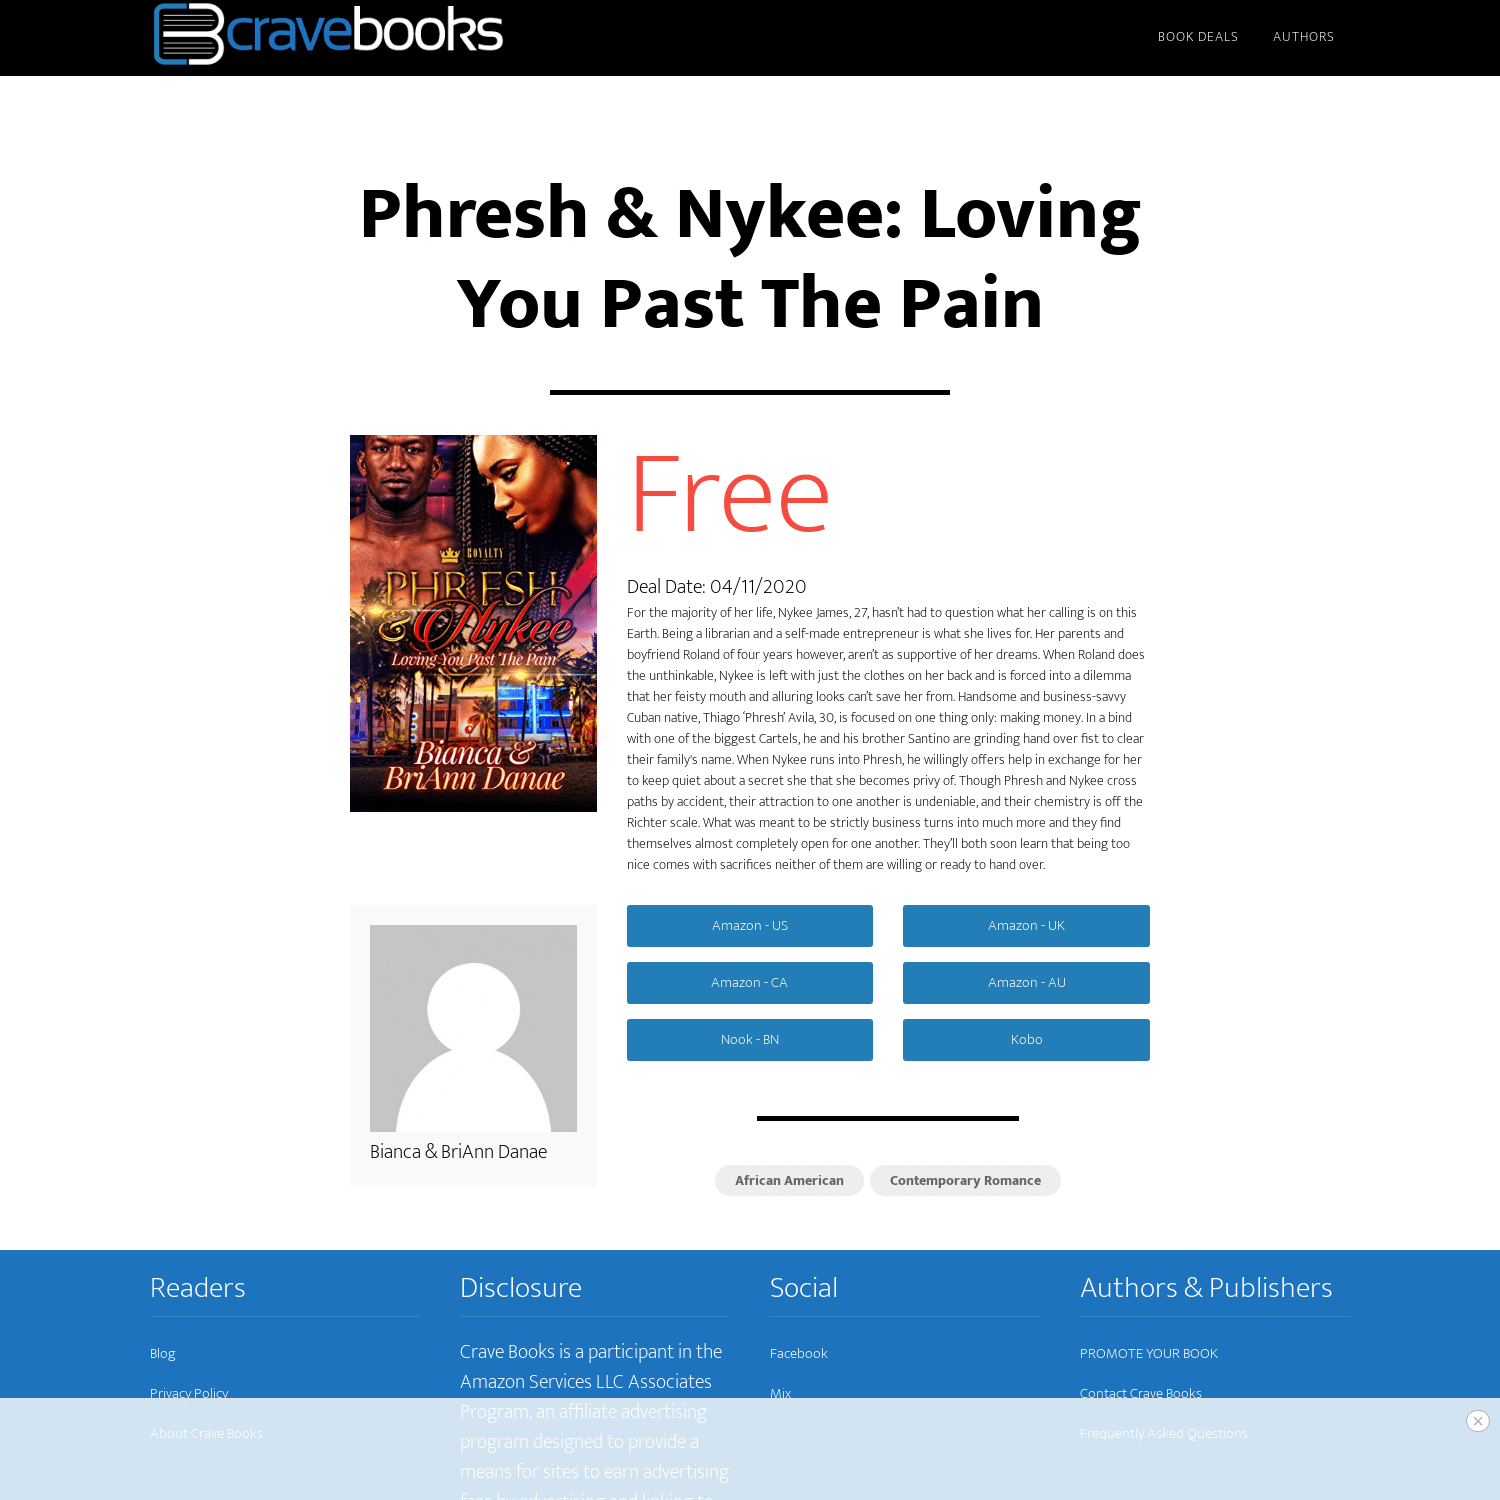 Phresh & Nykee: Loving You Past The Pain